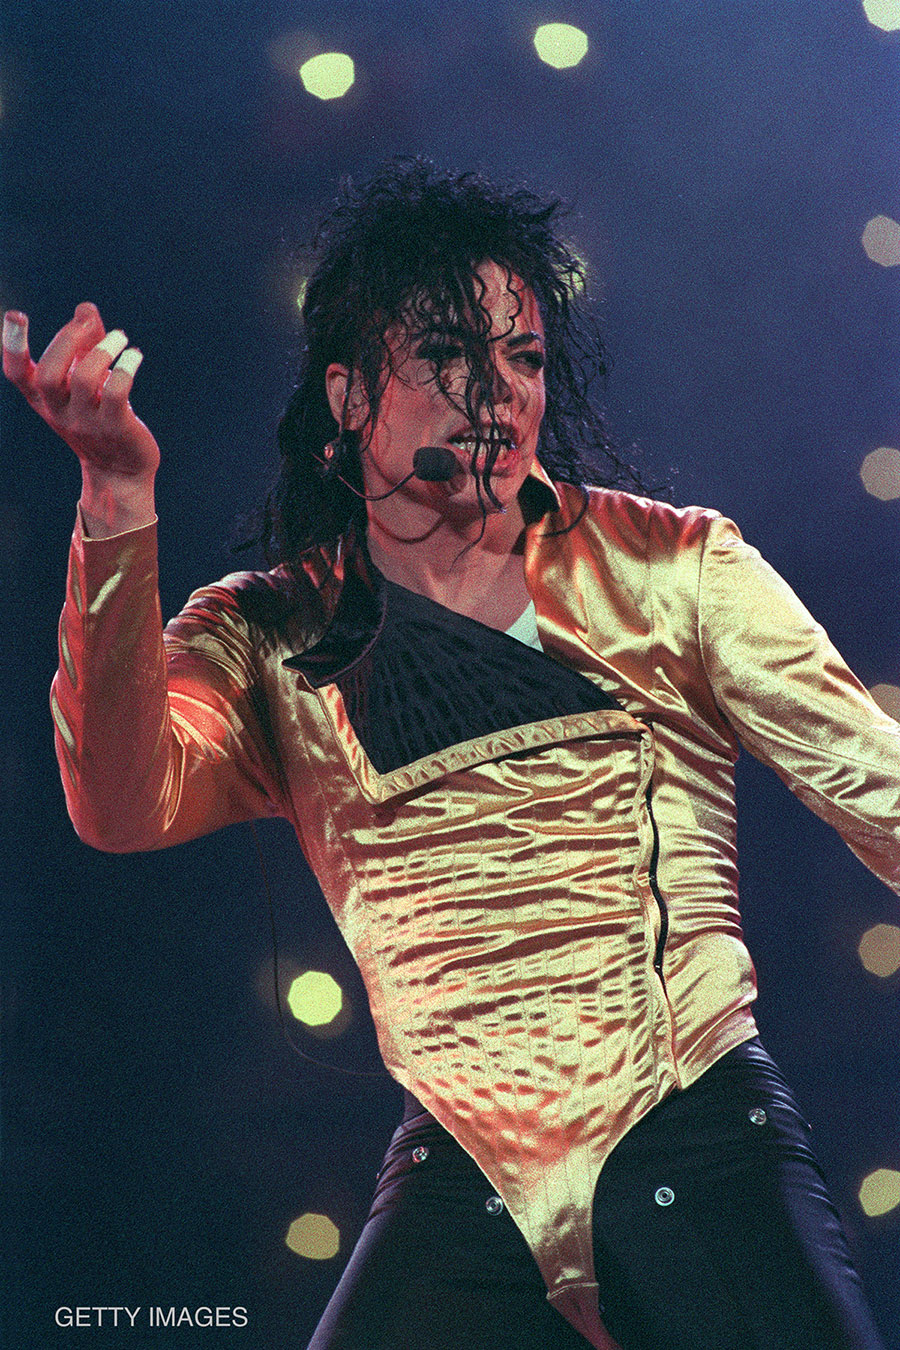 Michael Jackson performs at Tokyo Dome Stadium during Dangerous World Tour December 12, 1992